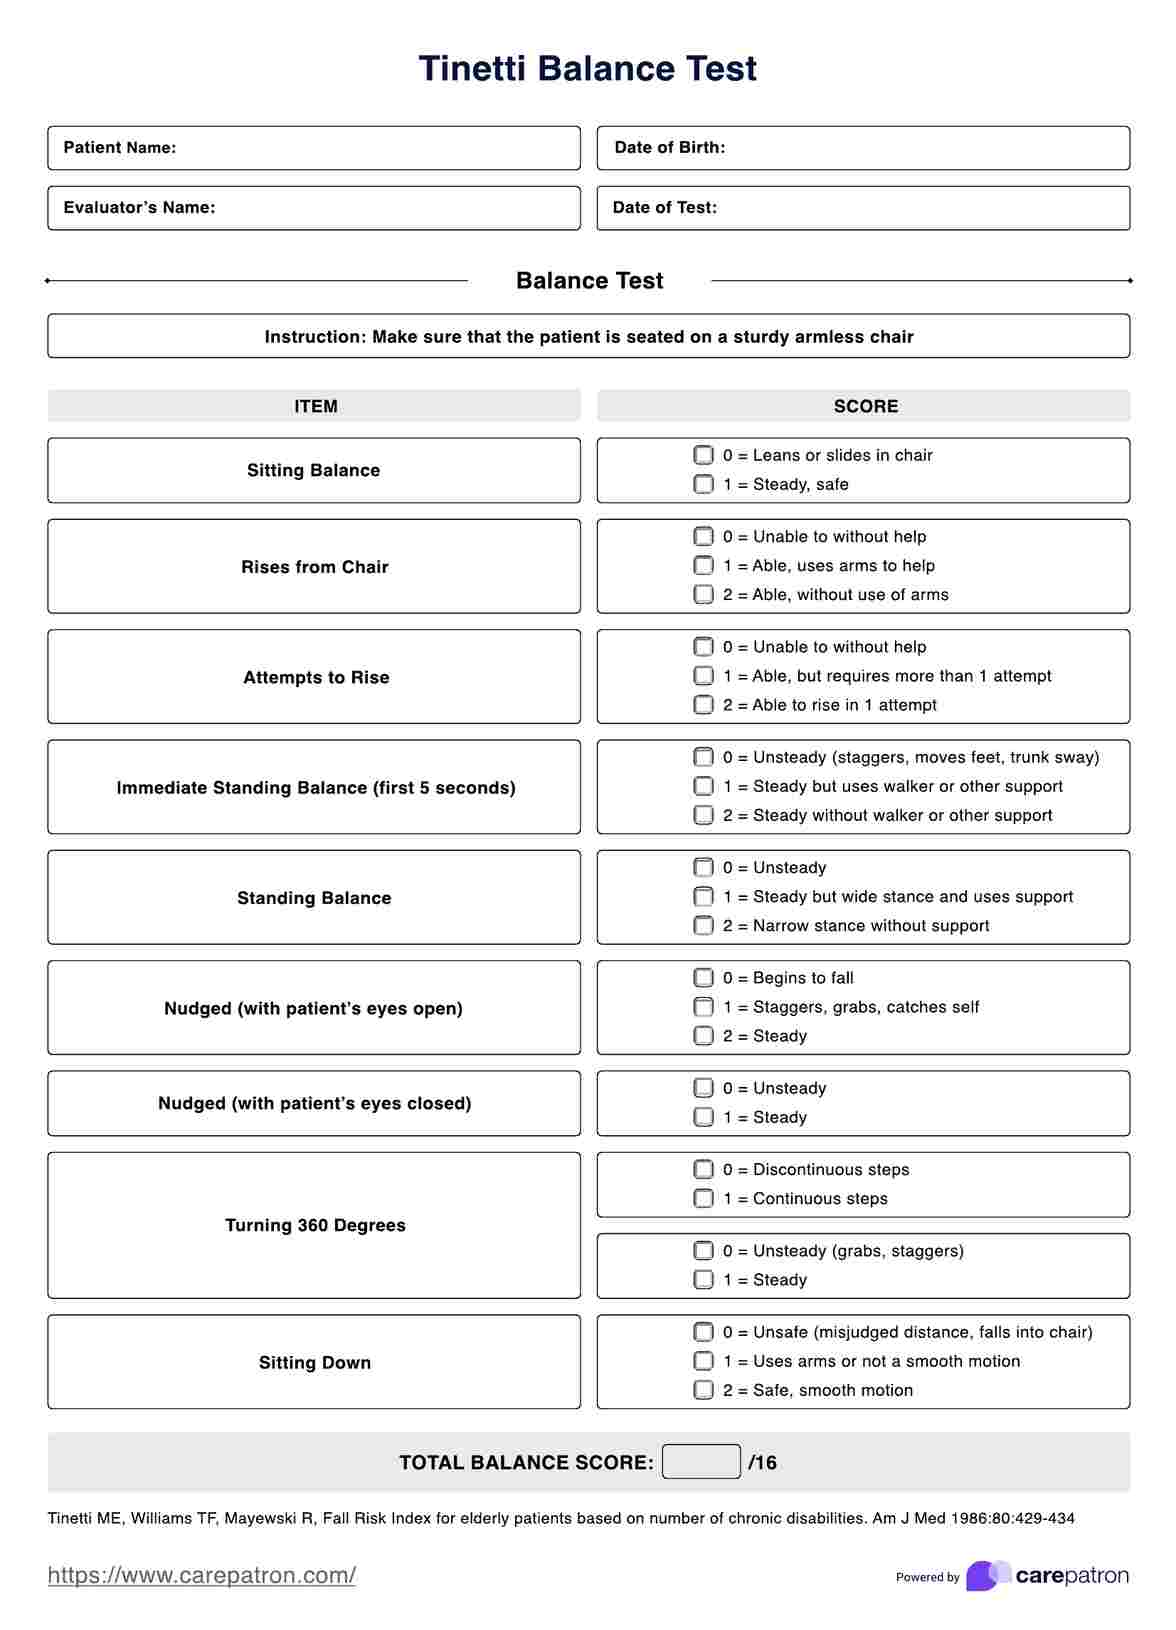 Tinetti Balance Test PDF Example